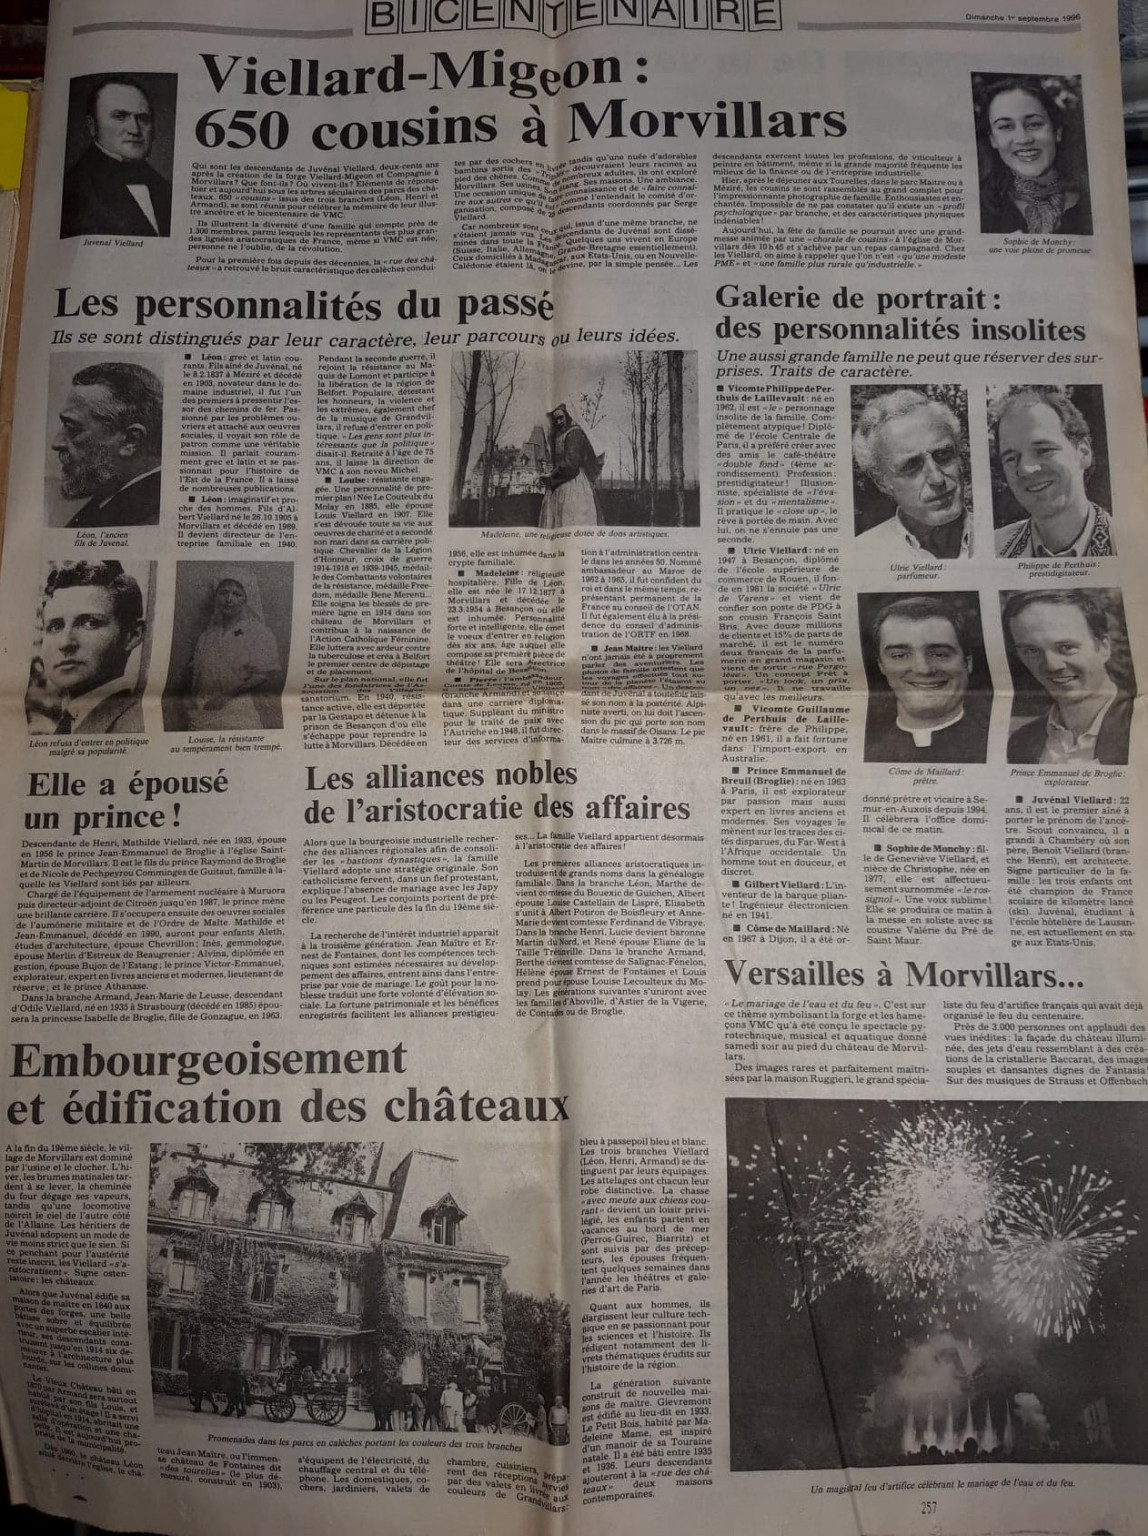 1996 bicentenaire